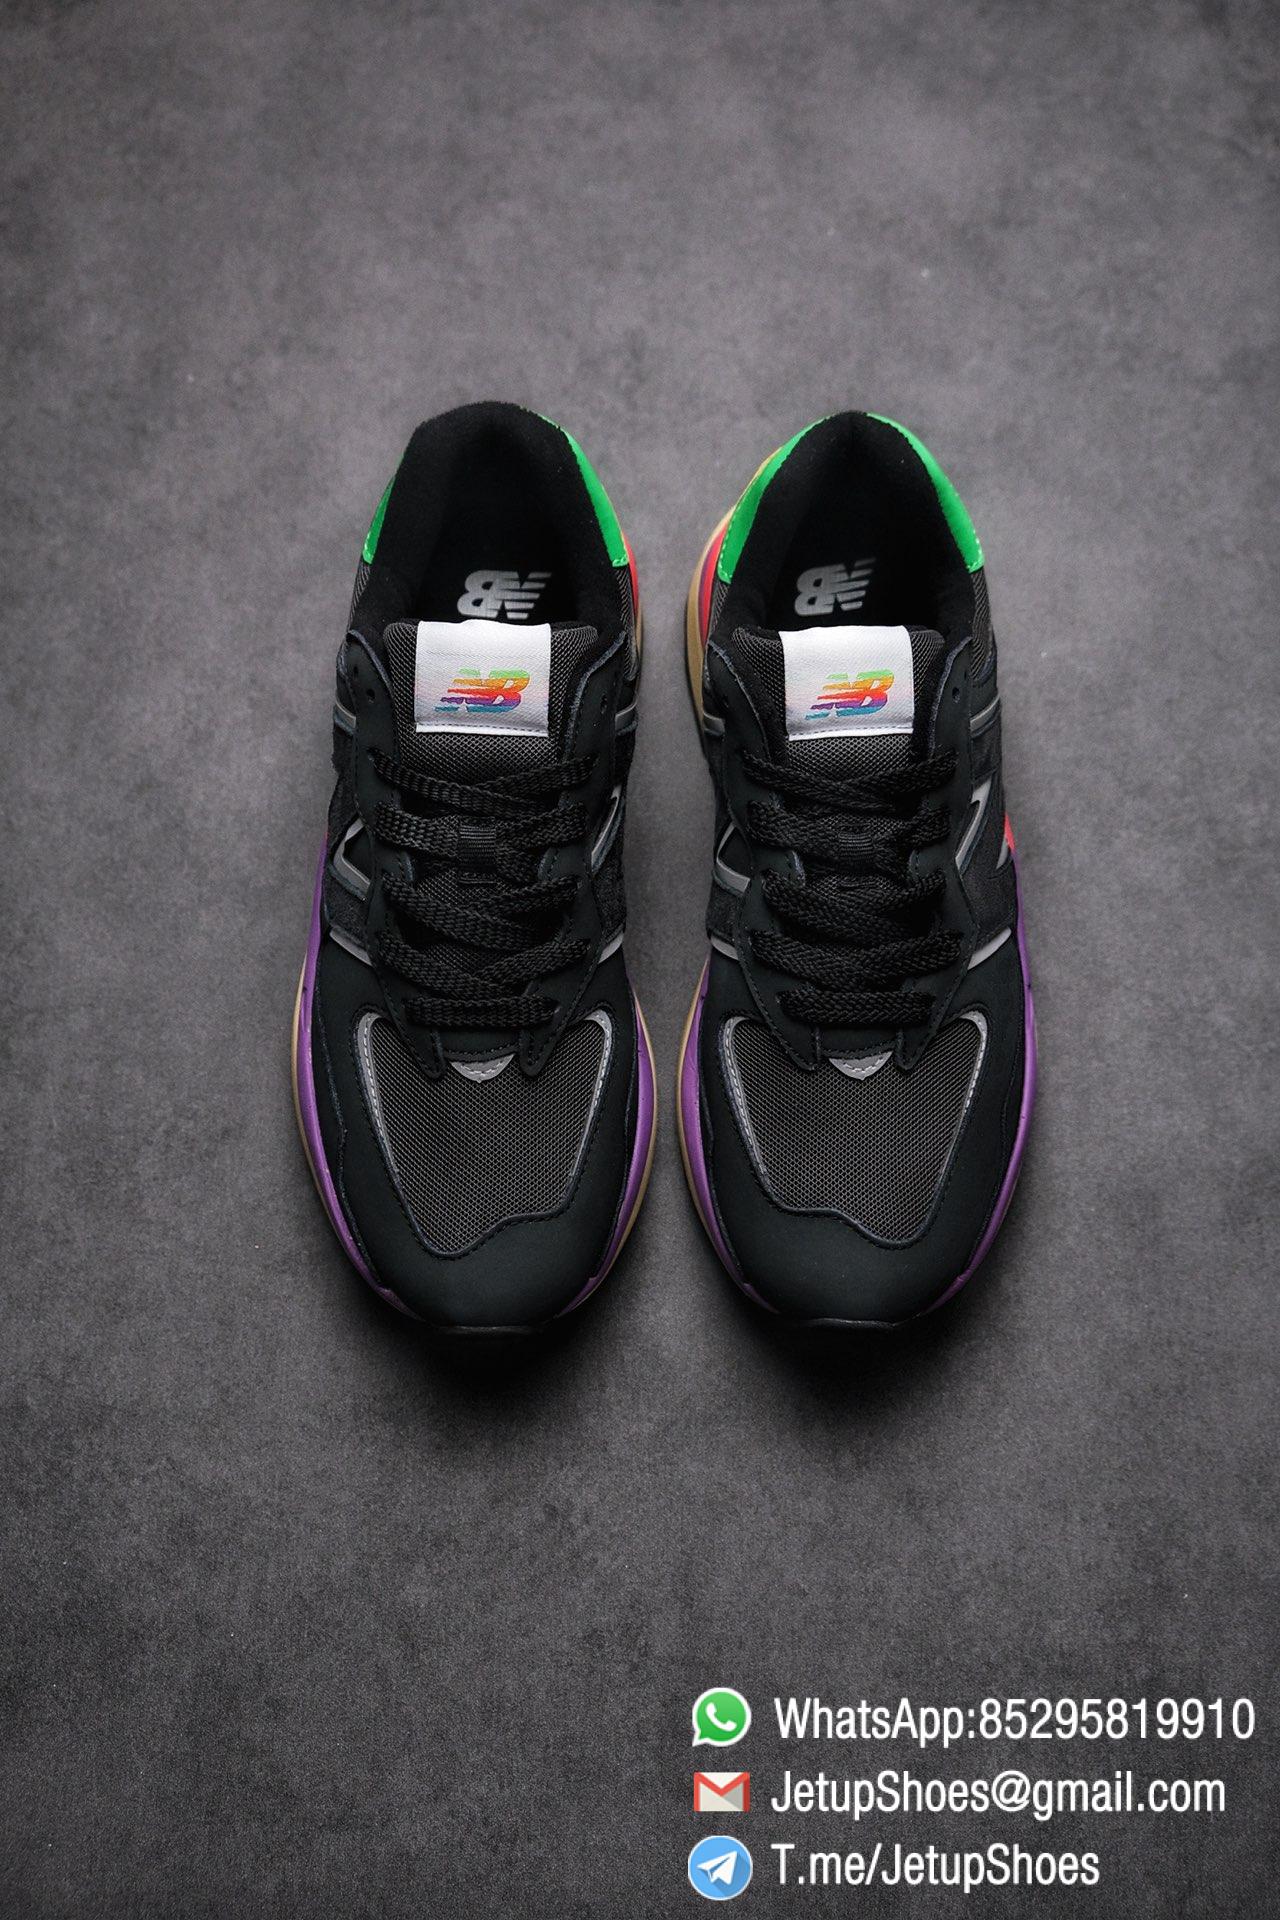 New Balance 5740 Black Multicolor Running Sneakers M5740LB Black Mesh Upper Oriange Suede Oversized N 02